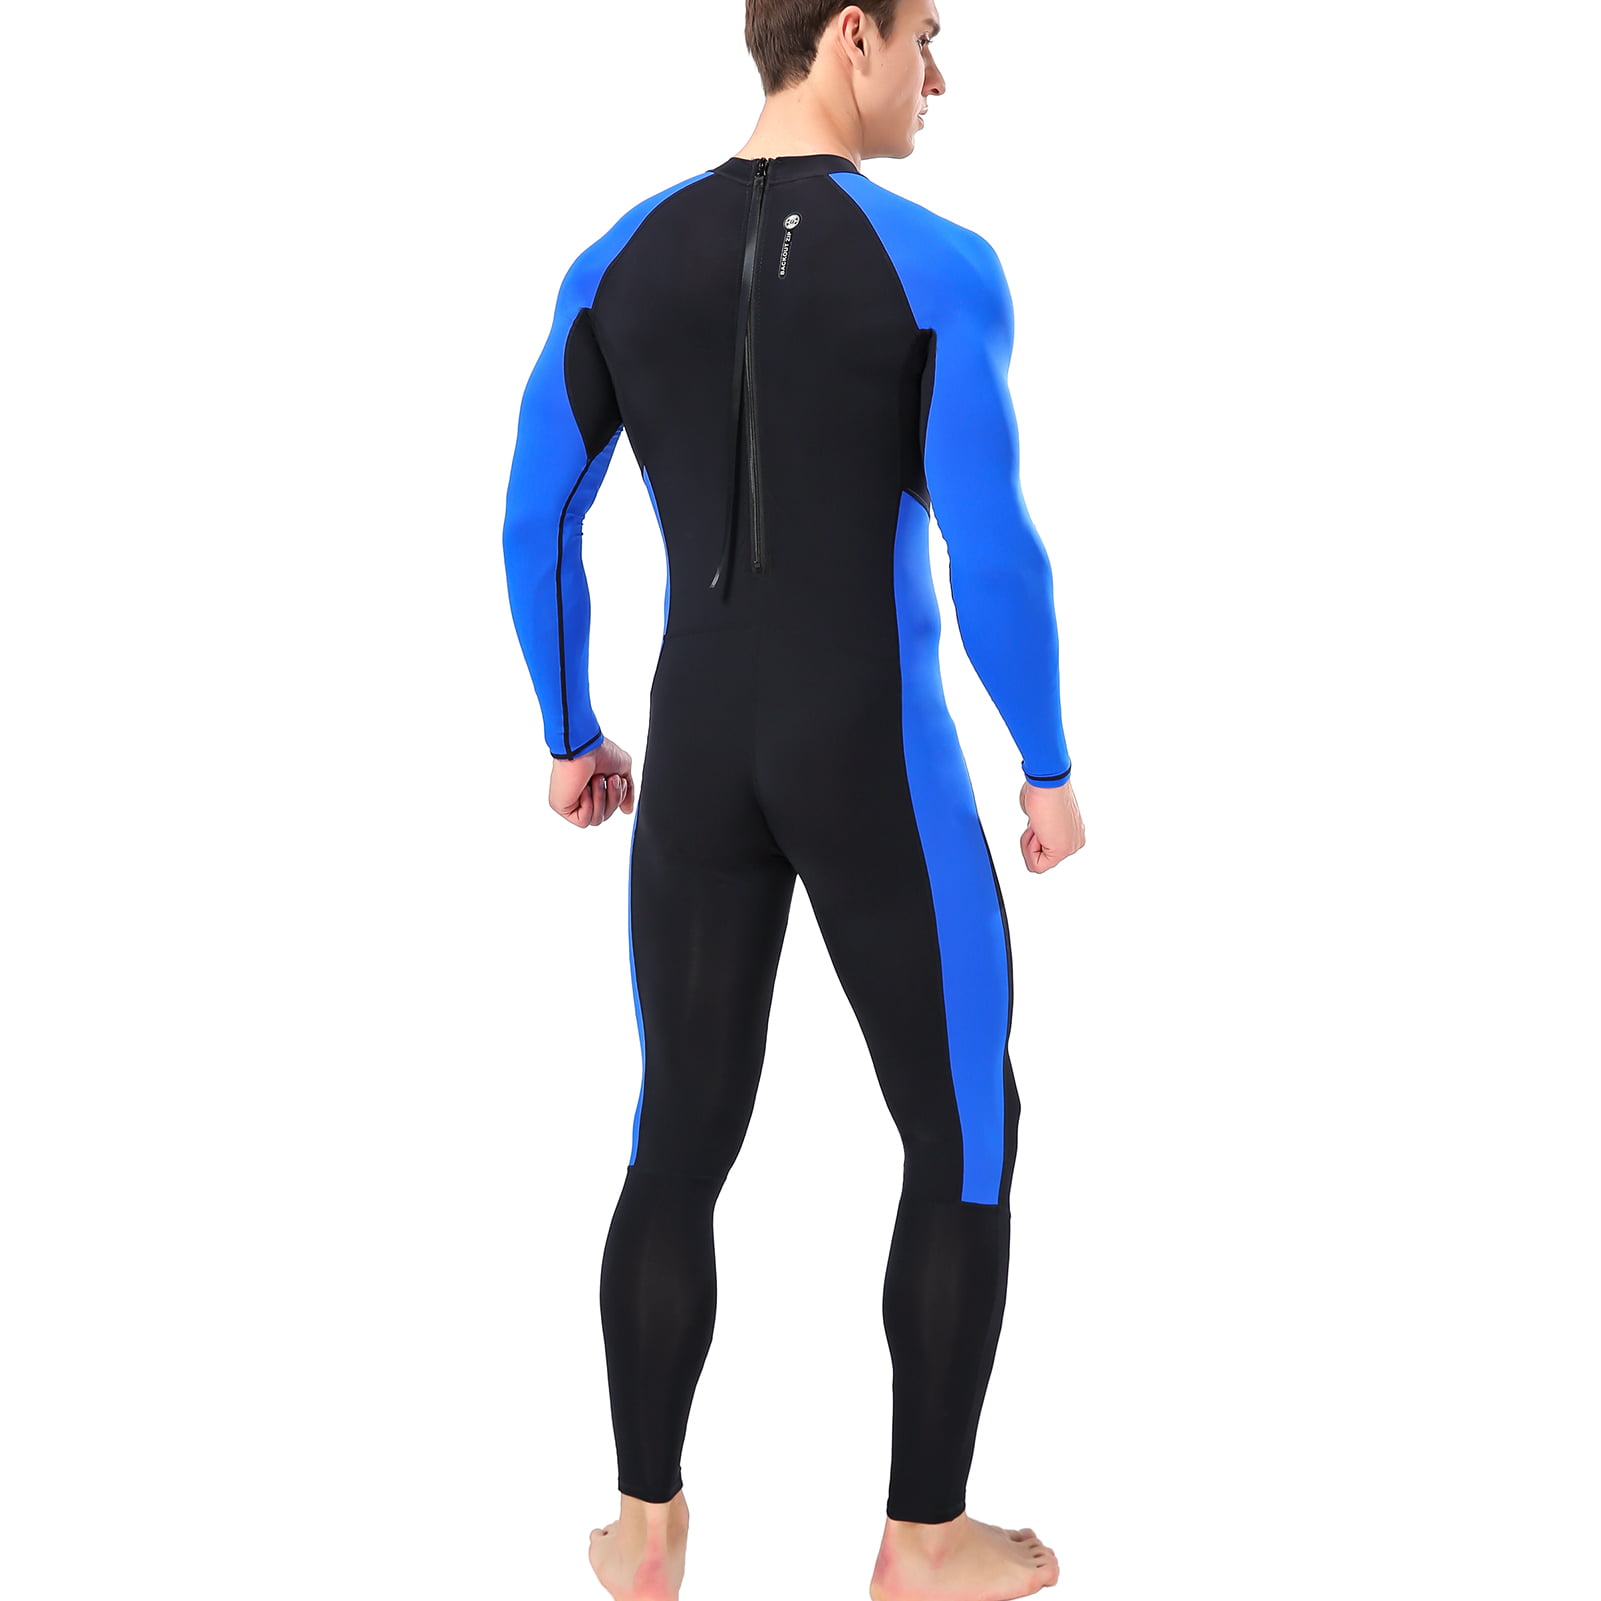 SLINX Men One-piece Diving Suit Long Sleeve Snorkeling Surfing Wetsuit Swimsuit 